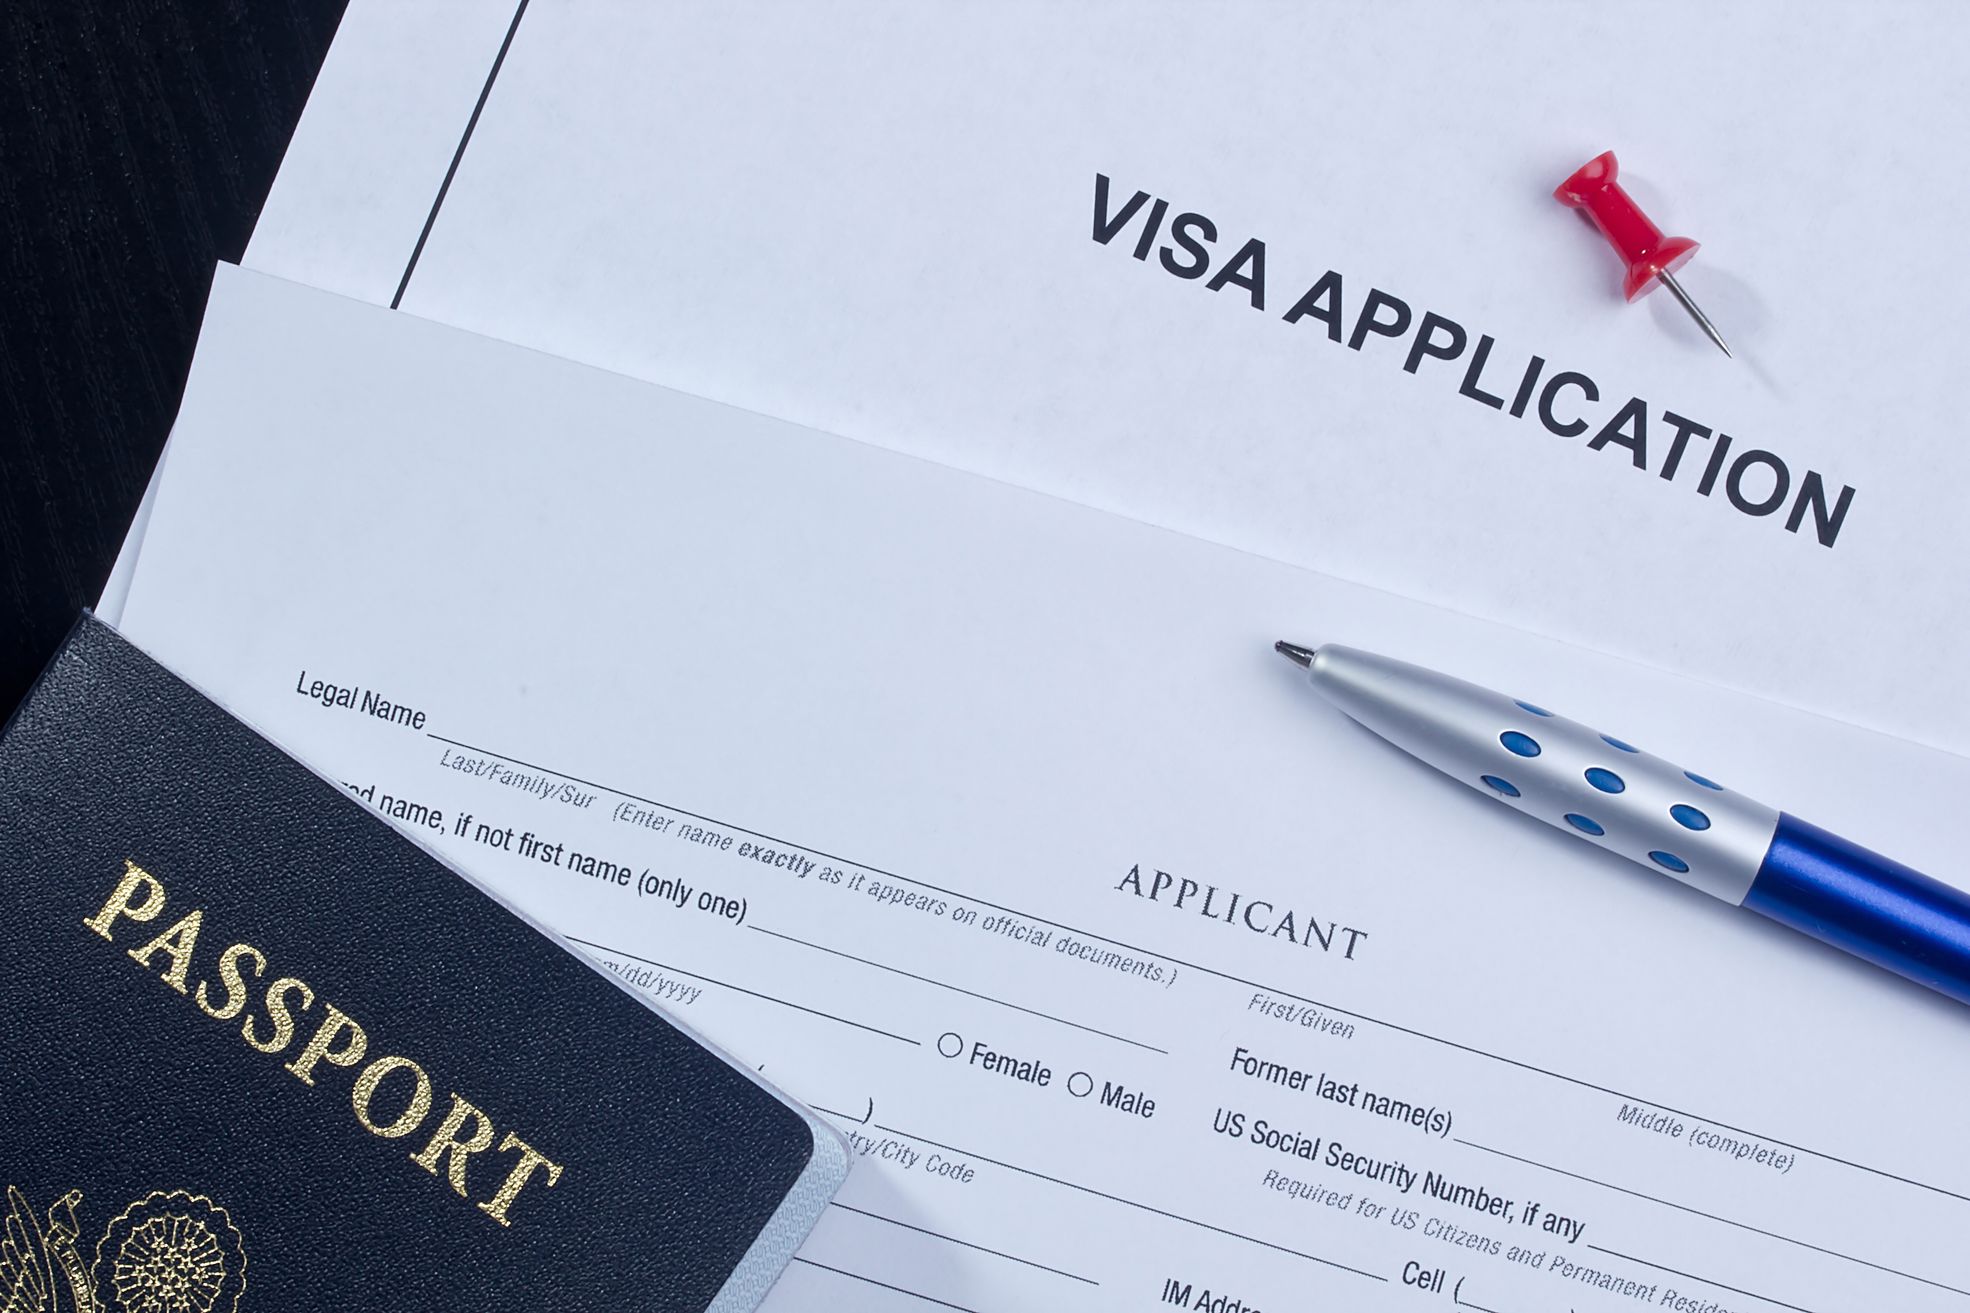 A close-up of a visa application and an upper part of a US passport